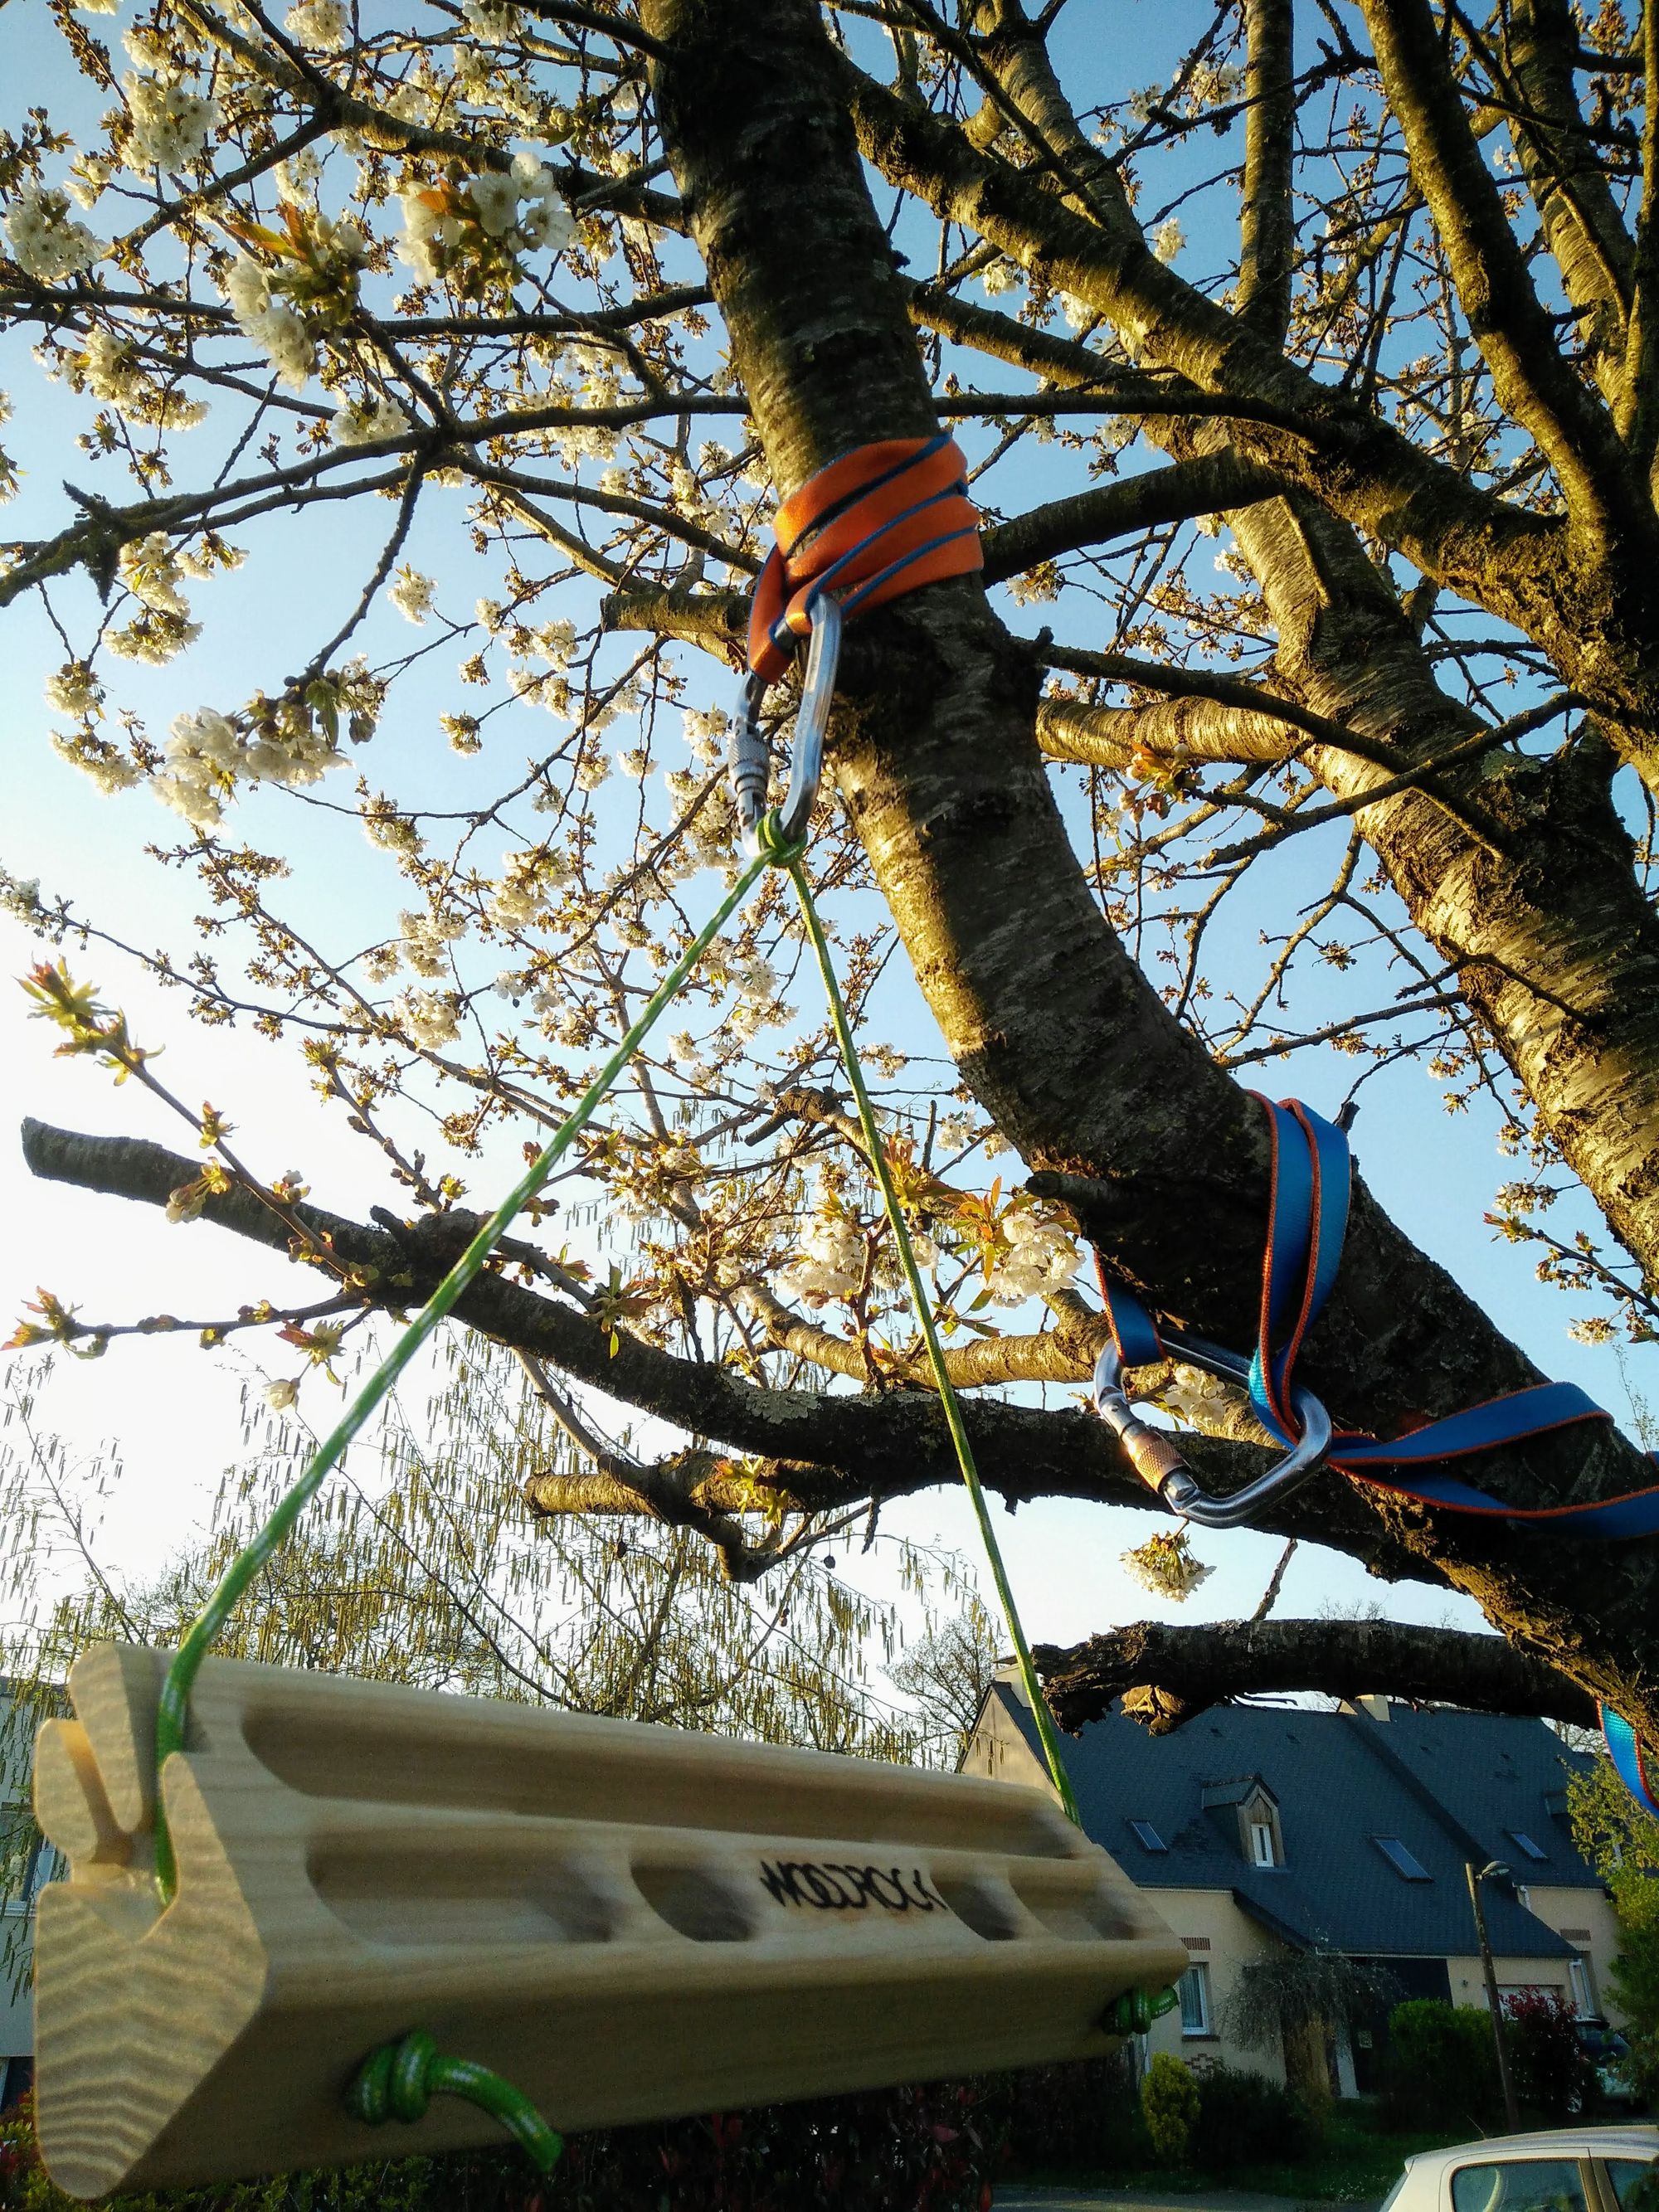 La fingerboard WoodRock nomade installée sous le cerisier.